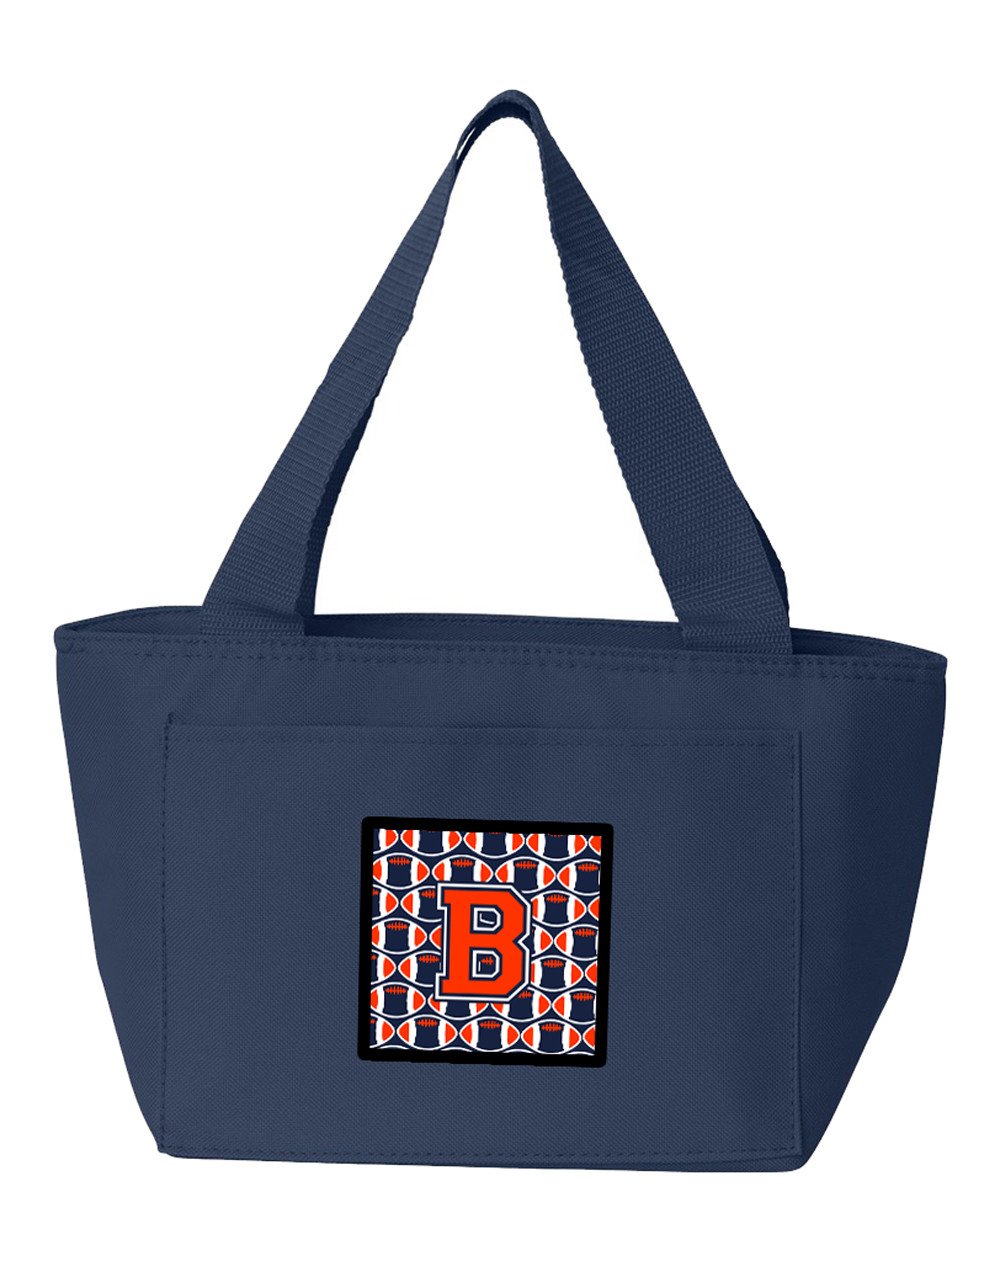 Letter B Football Orange, Blue and white Lunch Bag CJ1066-BNA-8808 by Caroline's Treasures